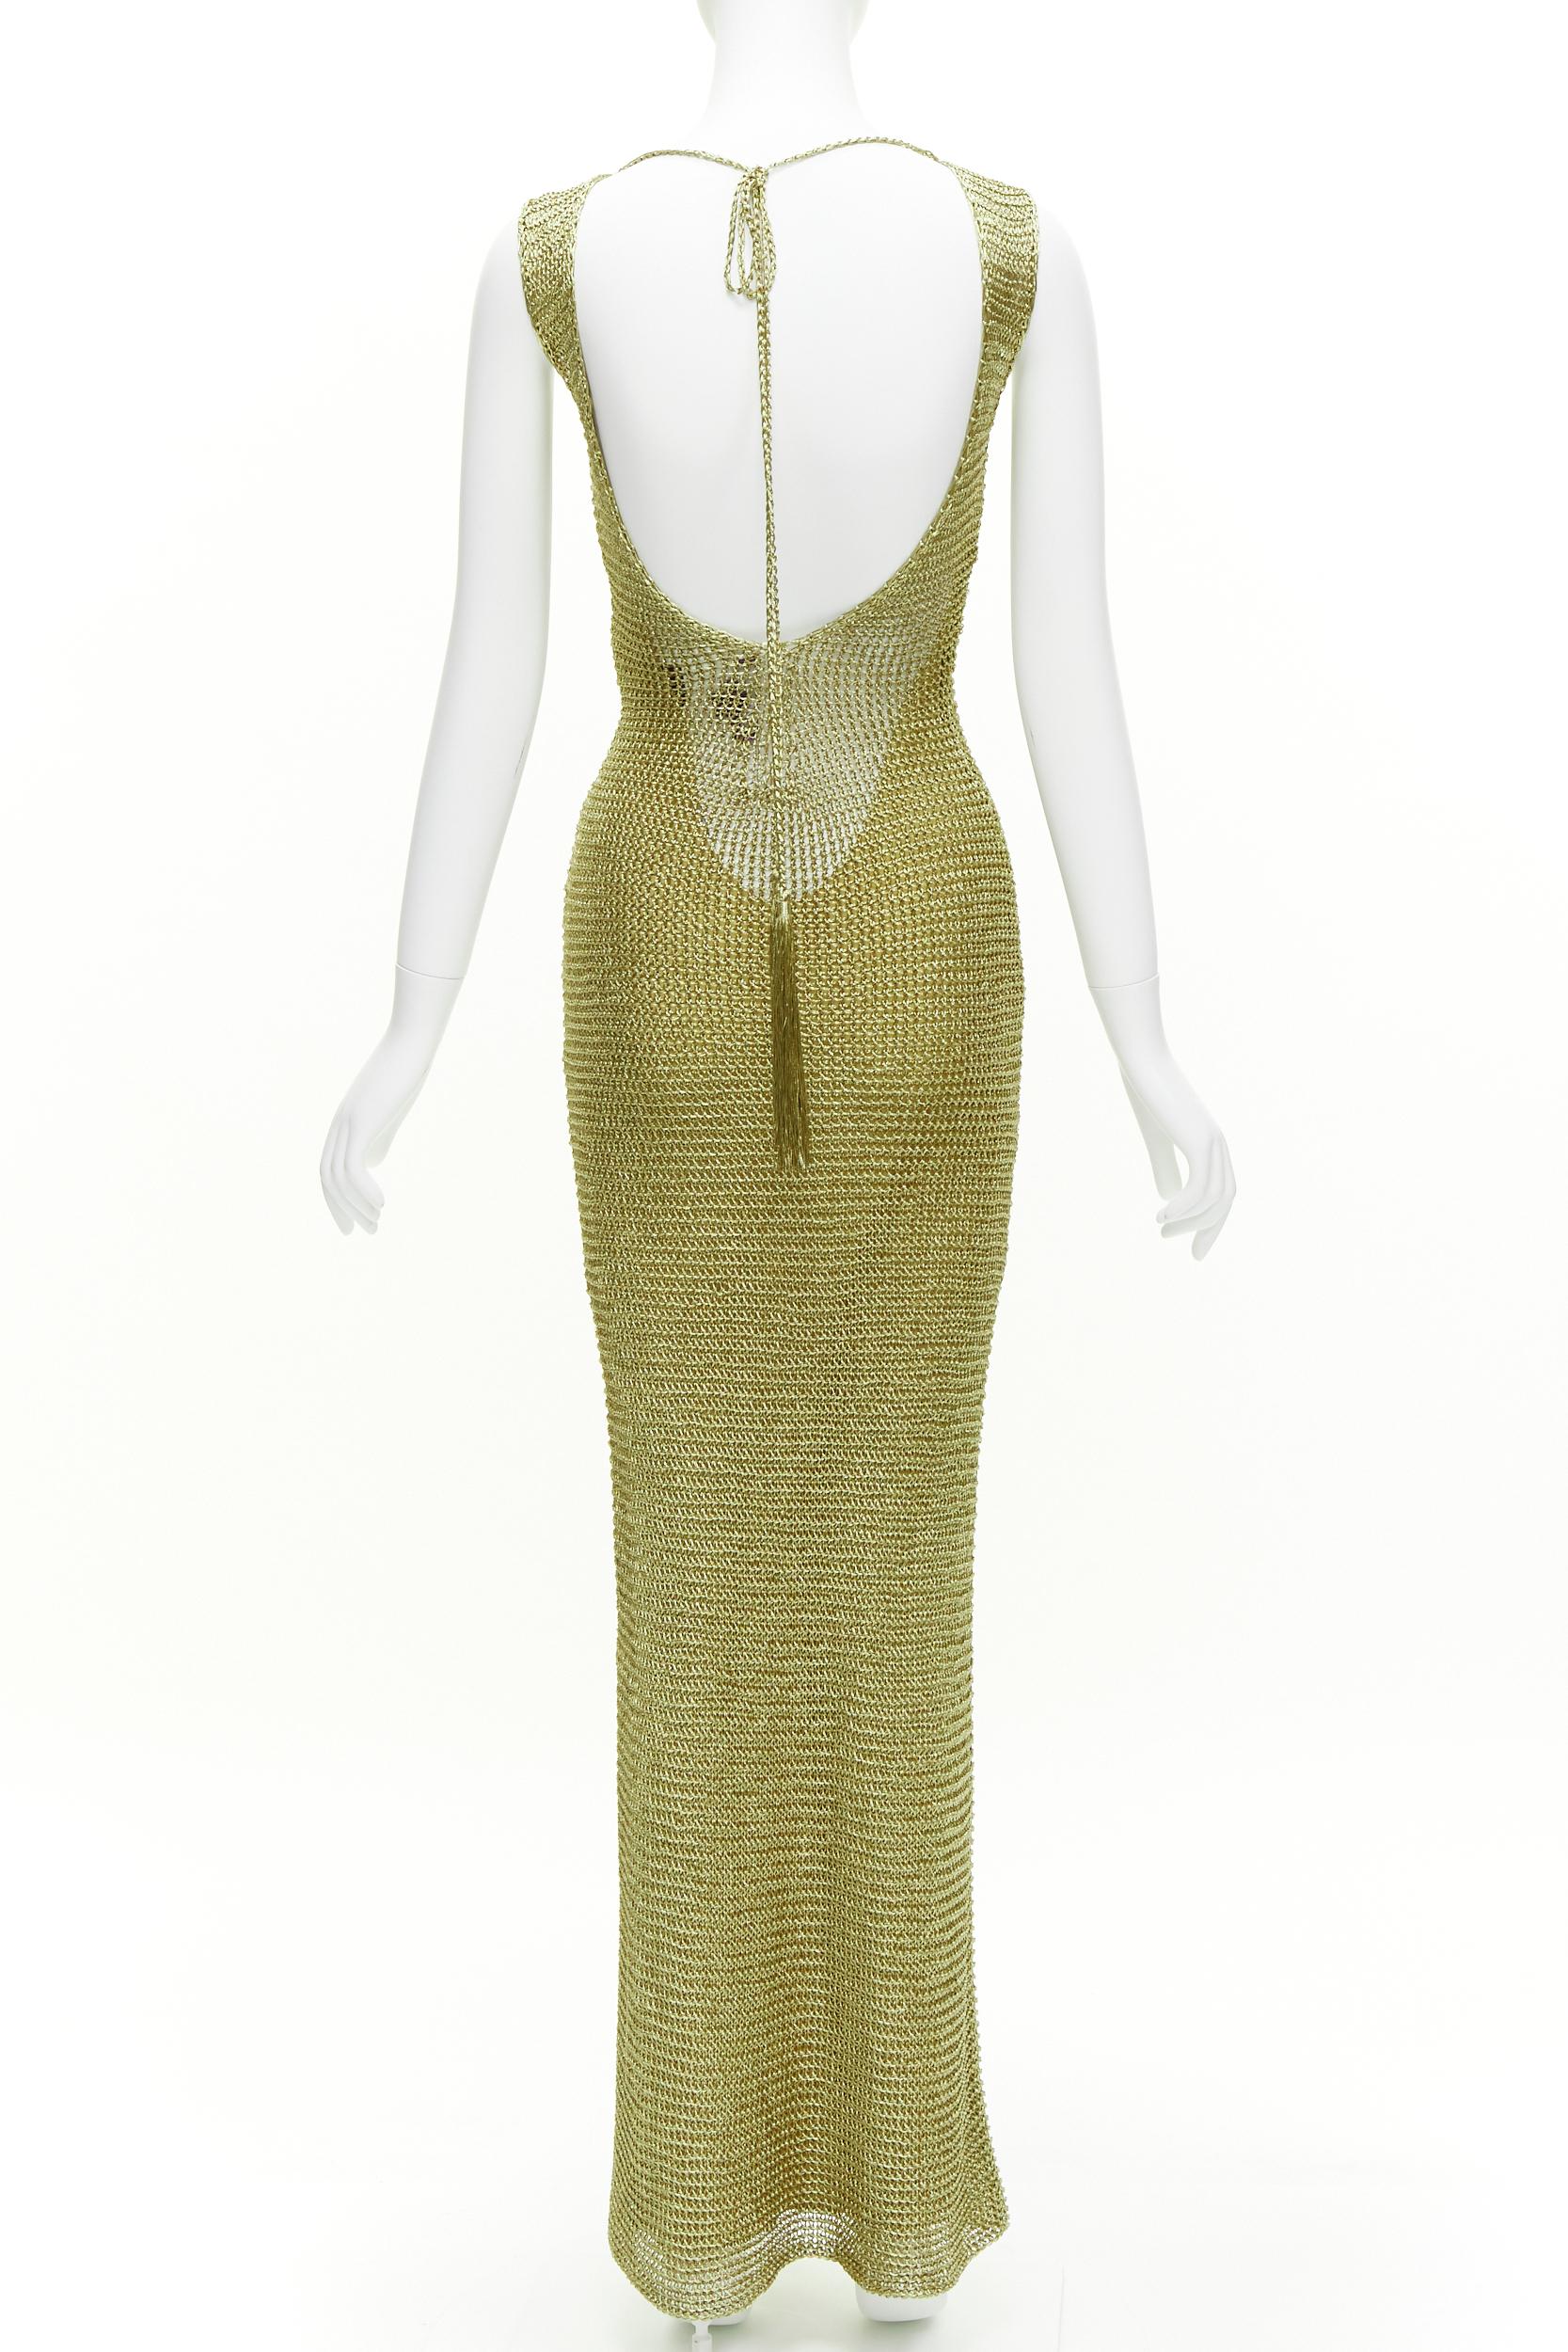 RALPH LAUREN PURPLE LABEL hand knit gold tassel crochet midi evening gown dress  For Sale 1